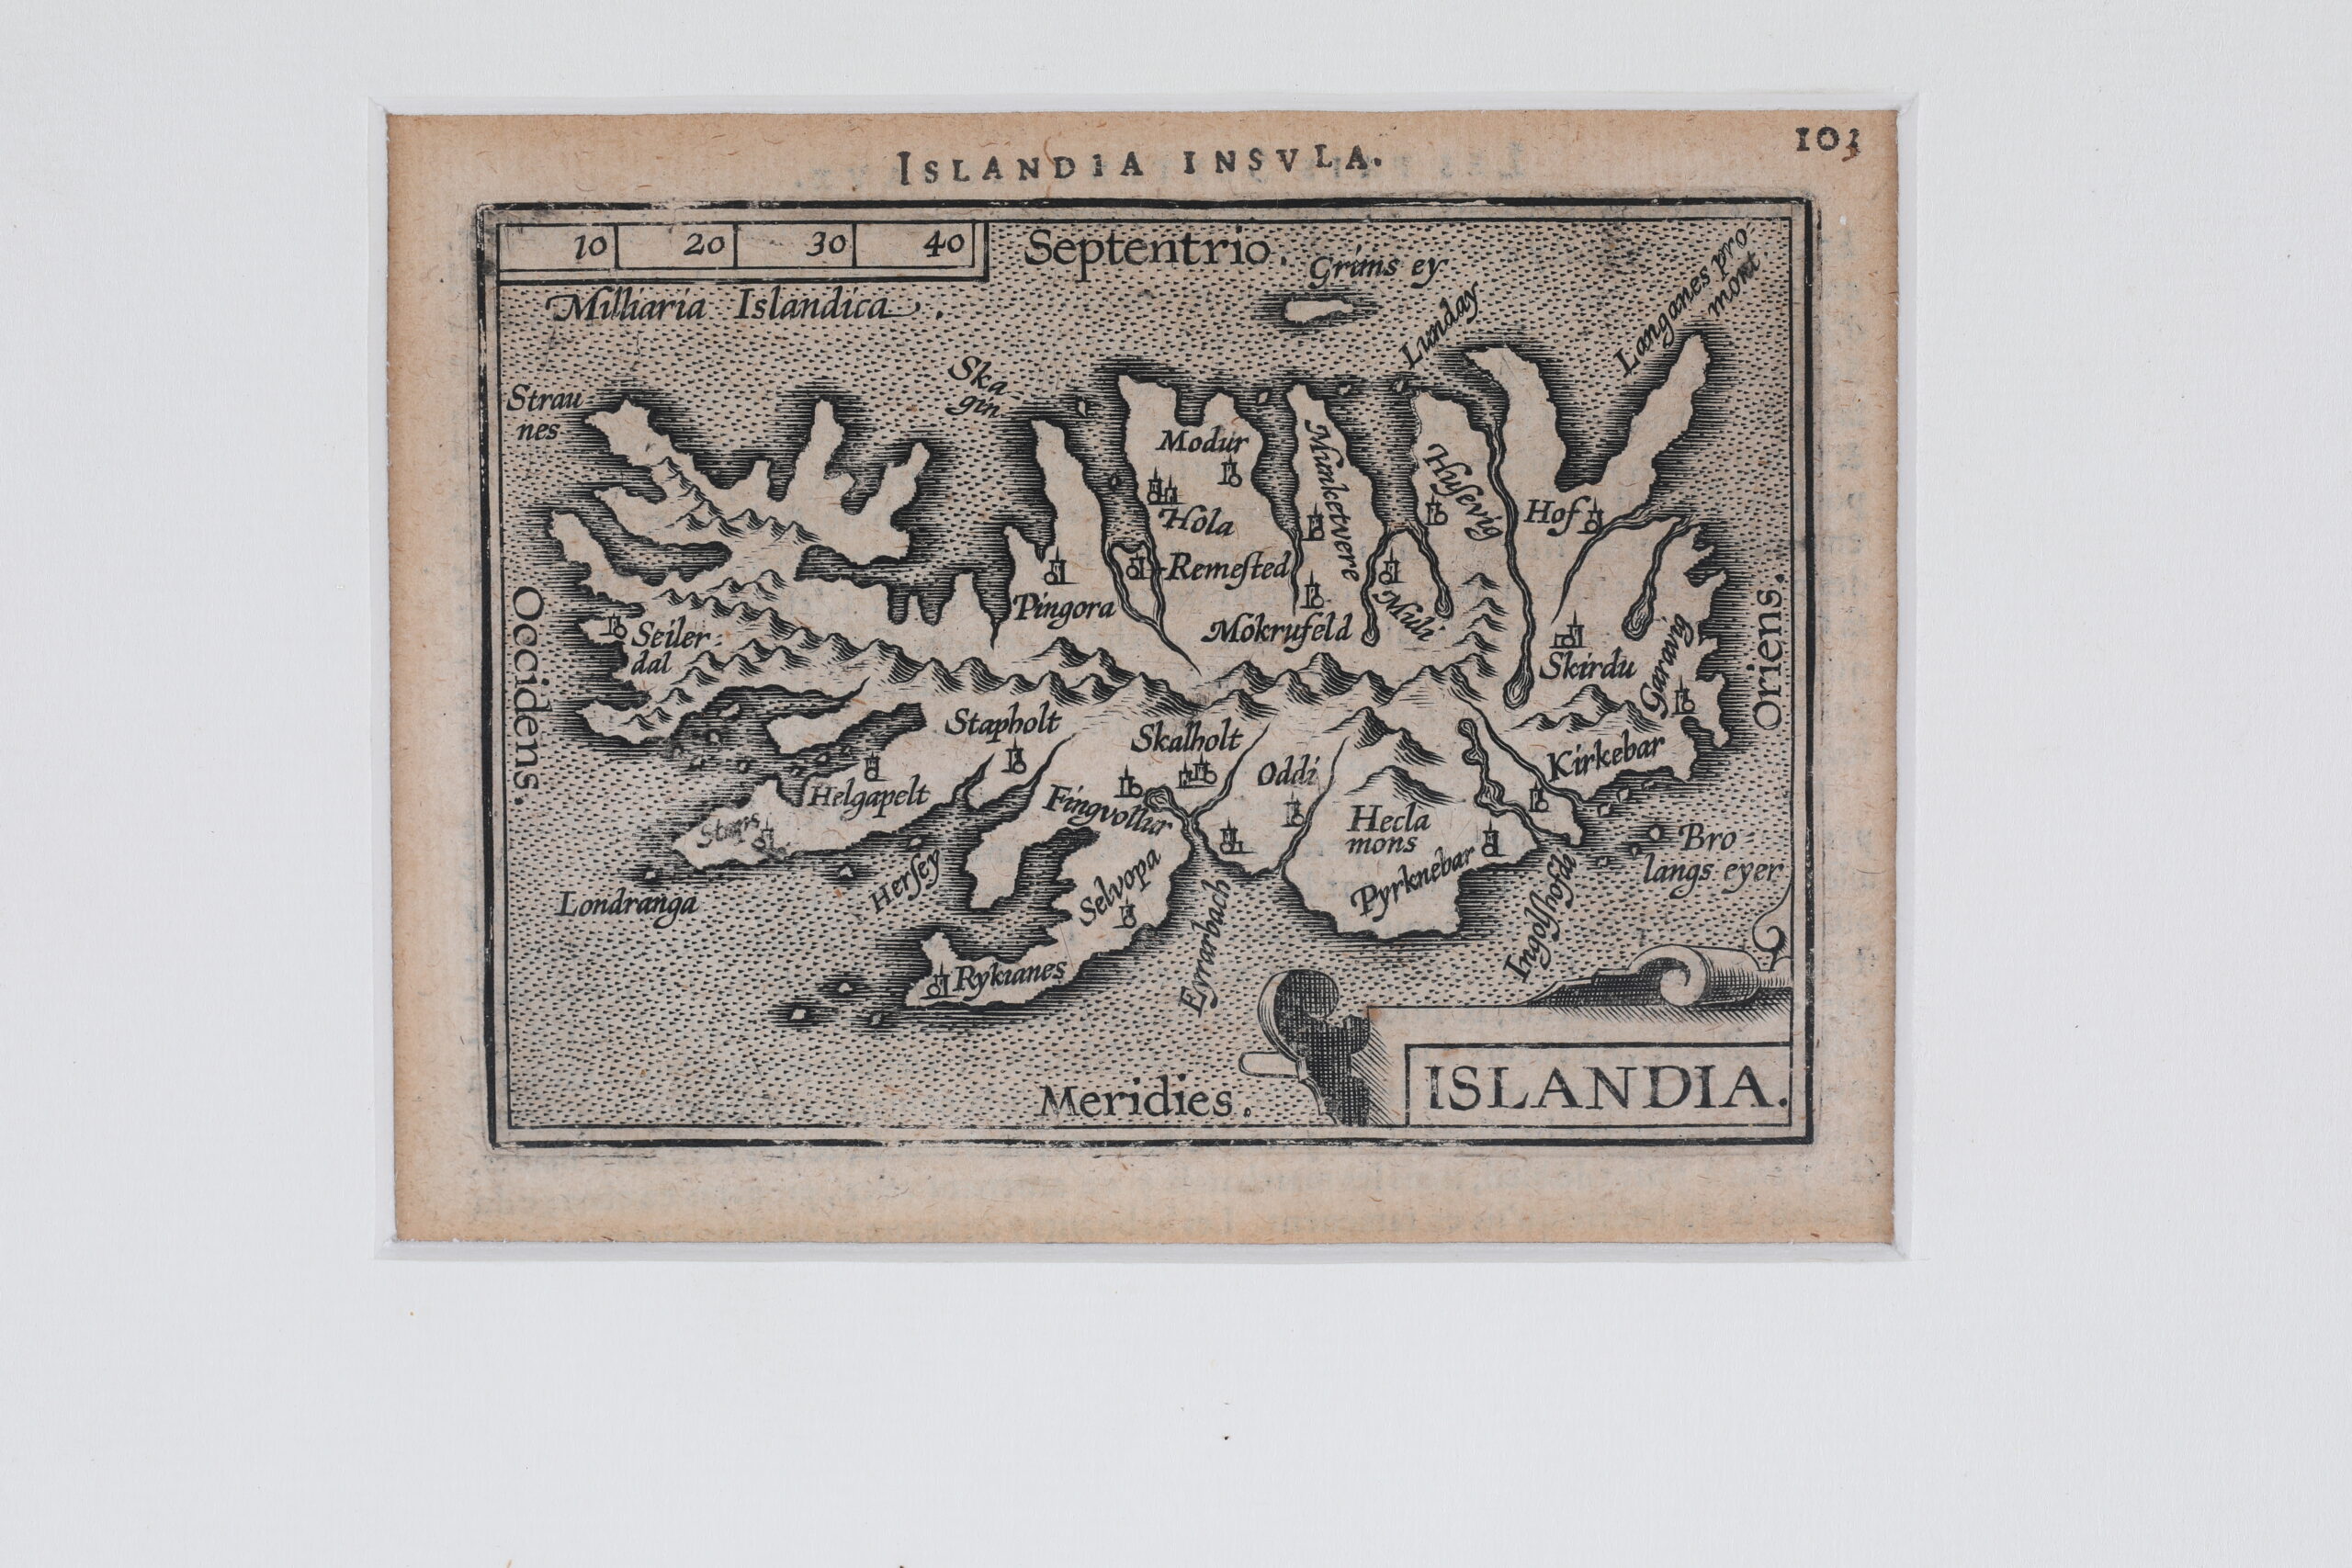 Islandia (Islandia Insula)